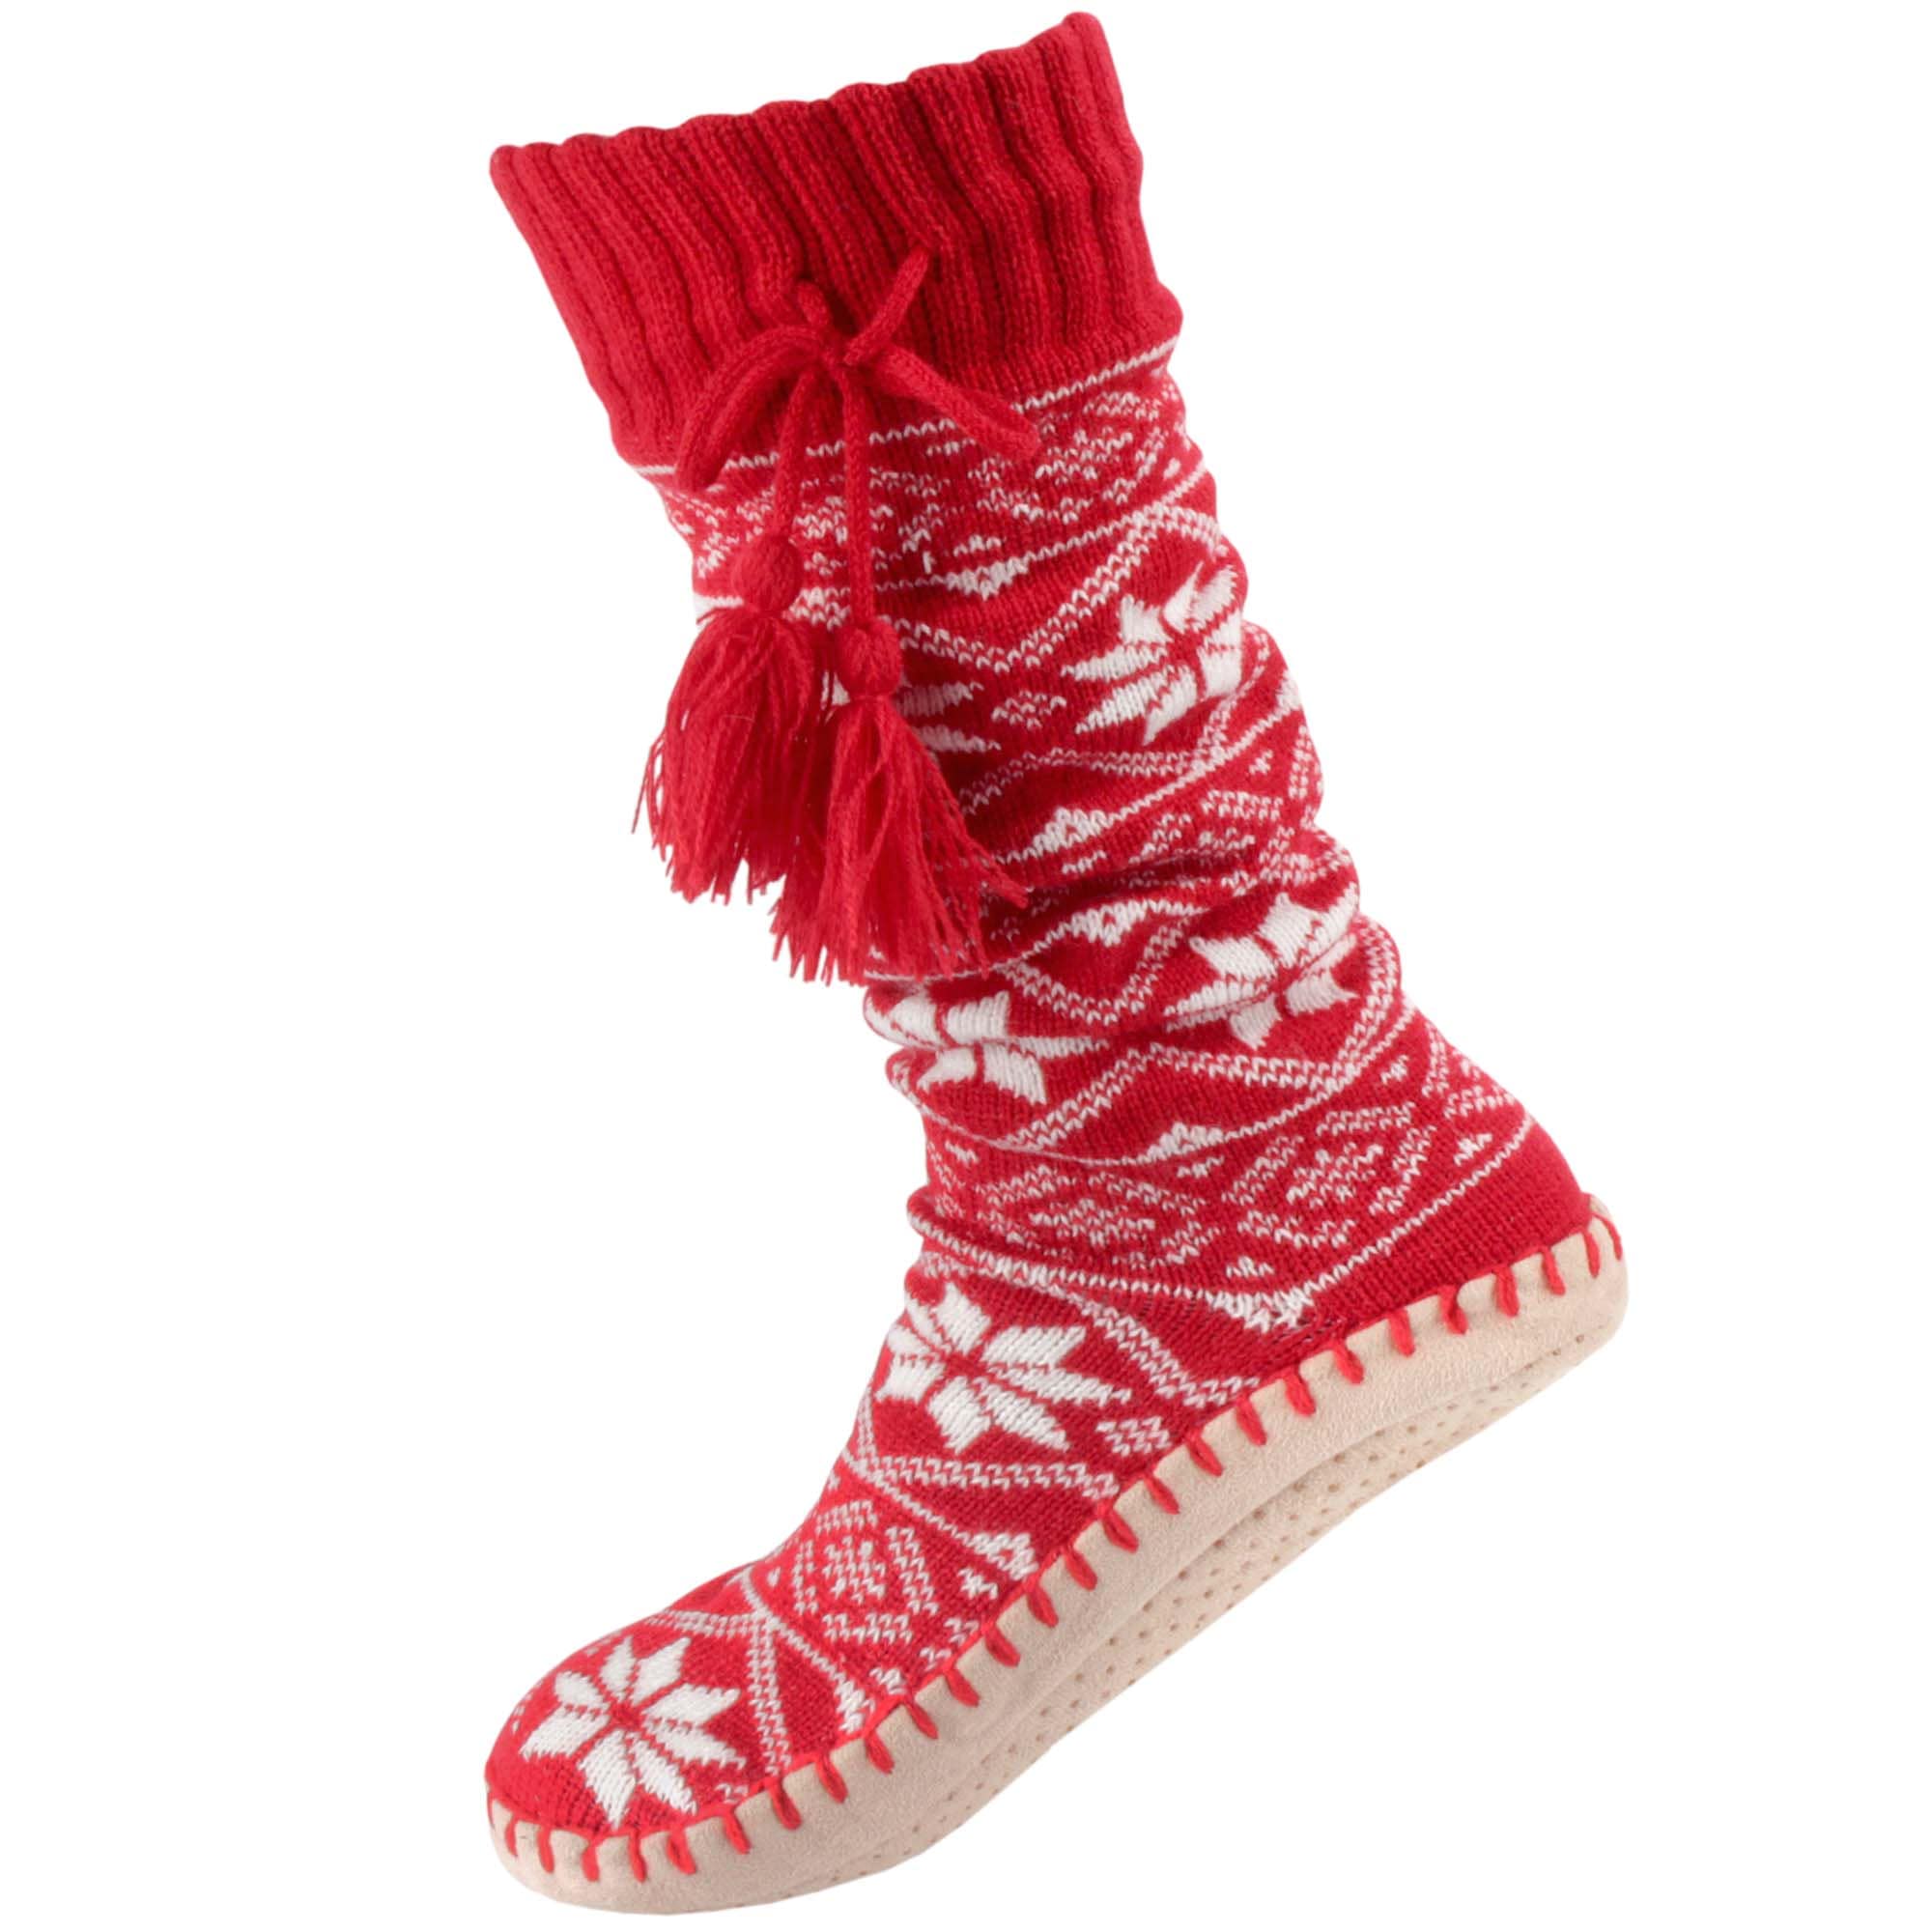 Women's Sherpa Lined Slipper Socks w/ Grippers One Size Burgundy Red/White